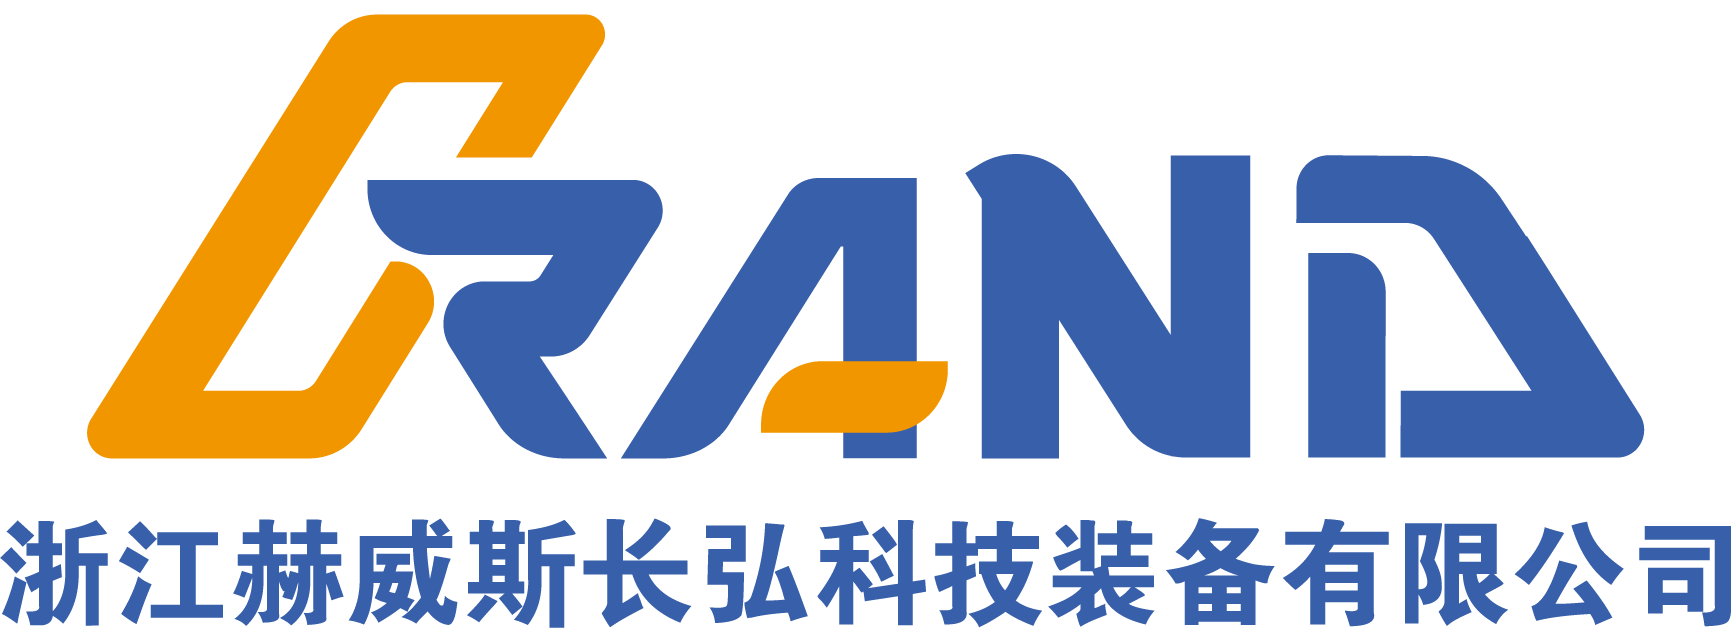 长弘logo